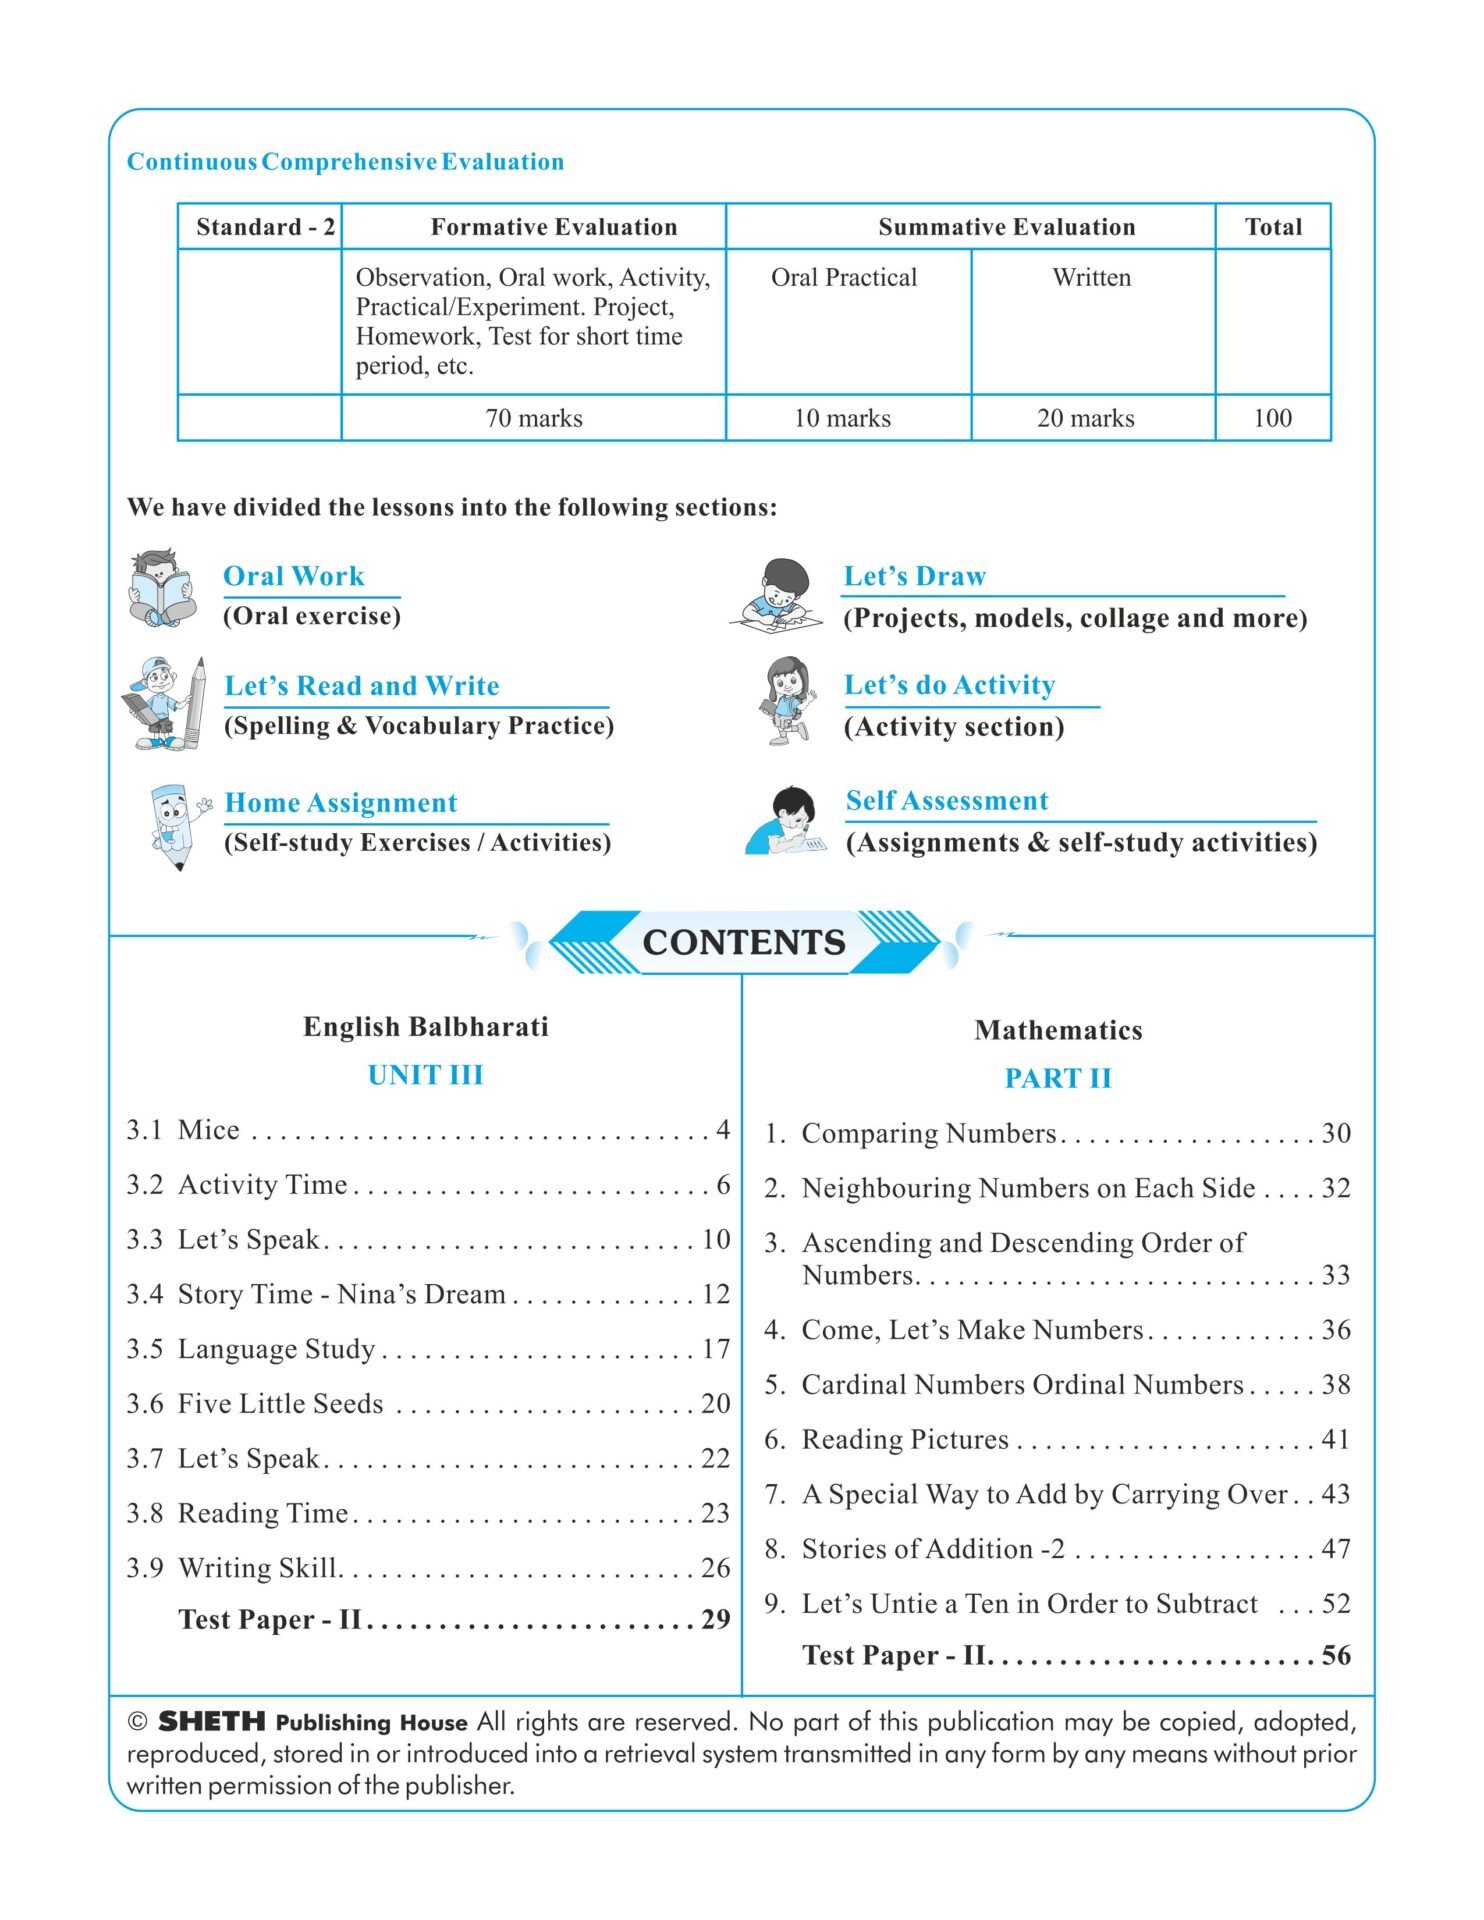 CCE Pattern Nigam Scholar Workbooks Termwise Integrated Workbook English Balbharati and Mathematics Standard 2 Term 2 Book 1 2